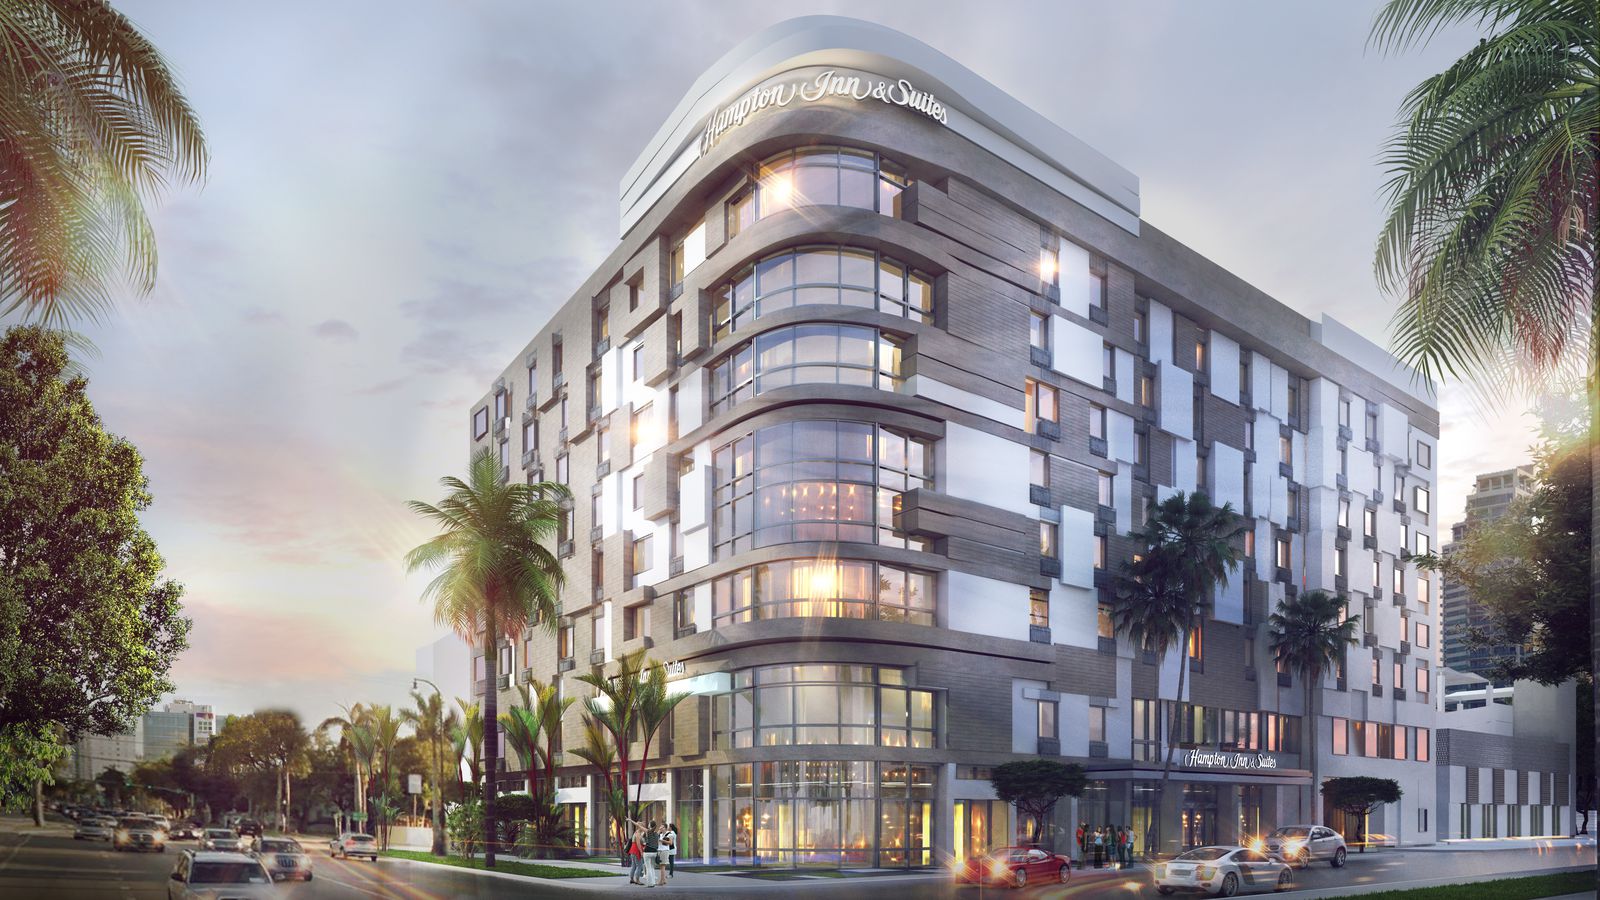 Miami Hotel Opening: The Hampton Inn & Suites near Midtown - Curbed Miami